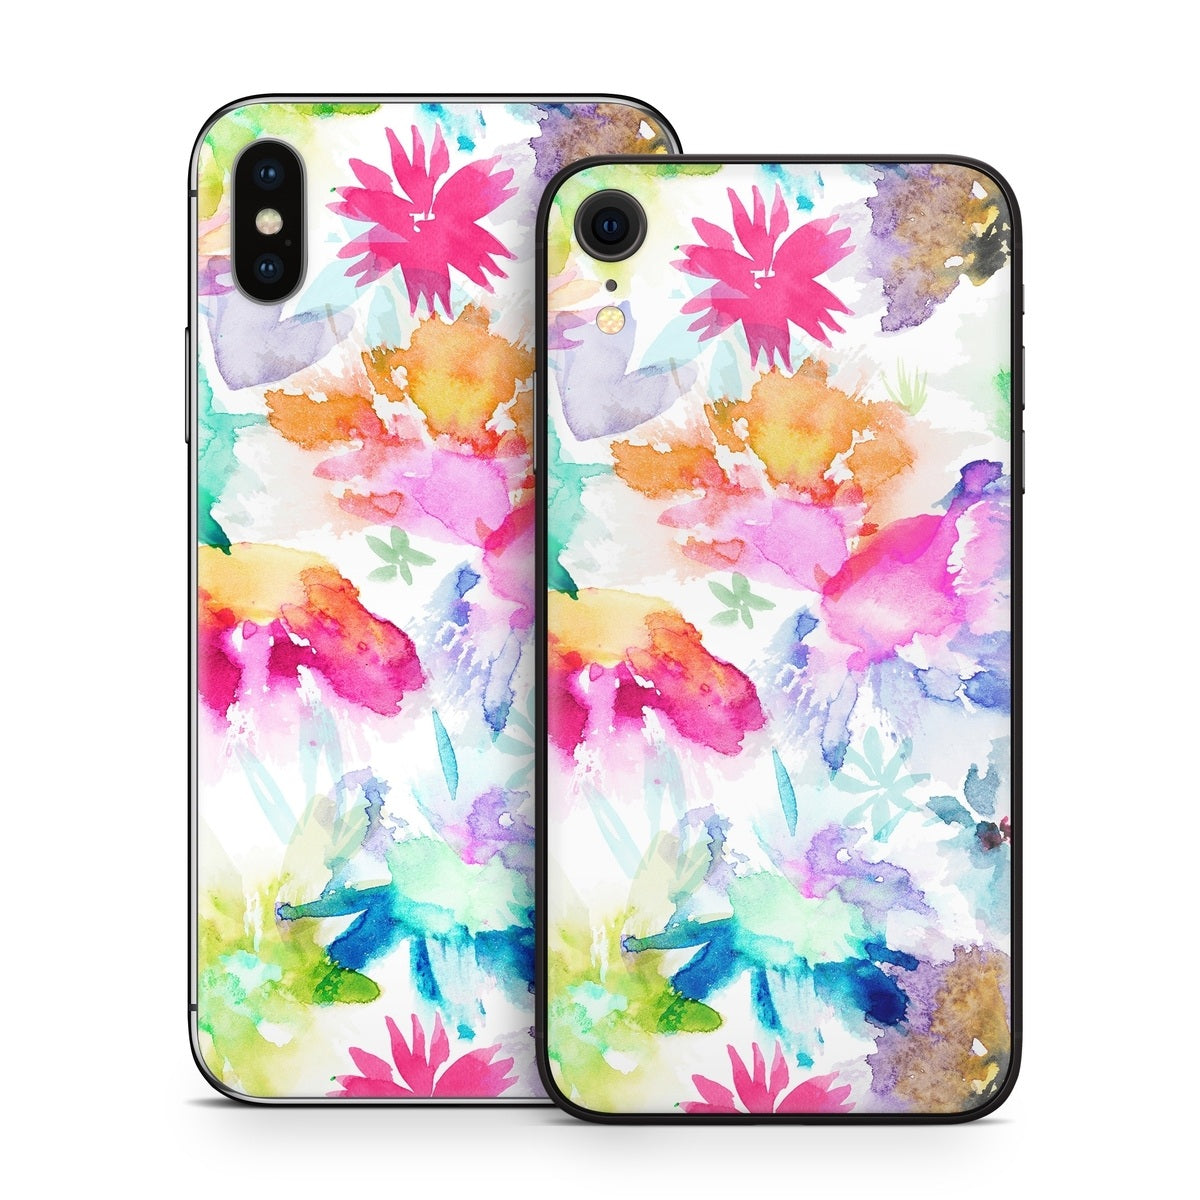 Watercolor Spring Memories - Apple iPhone X Skin